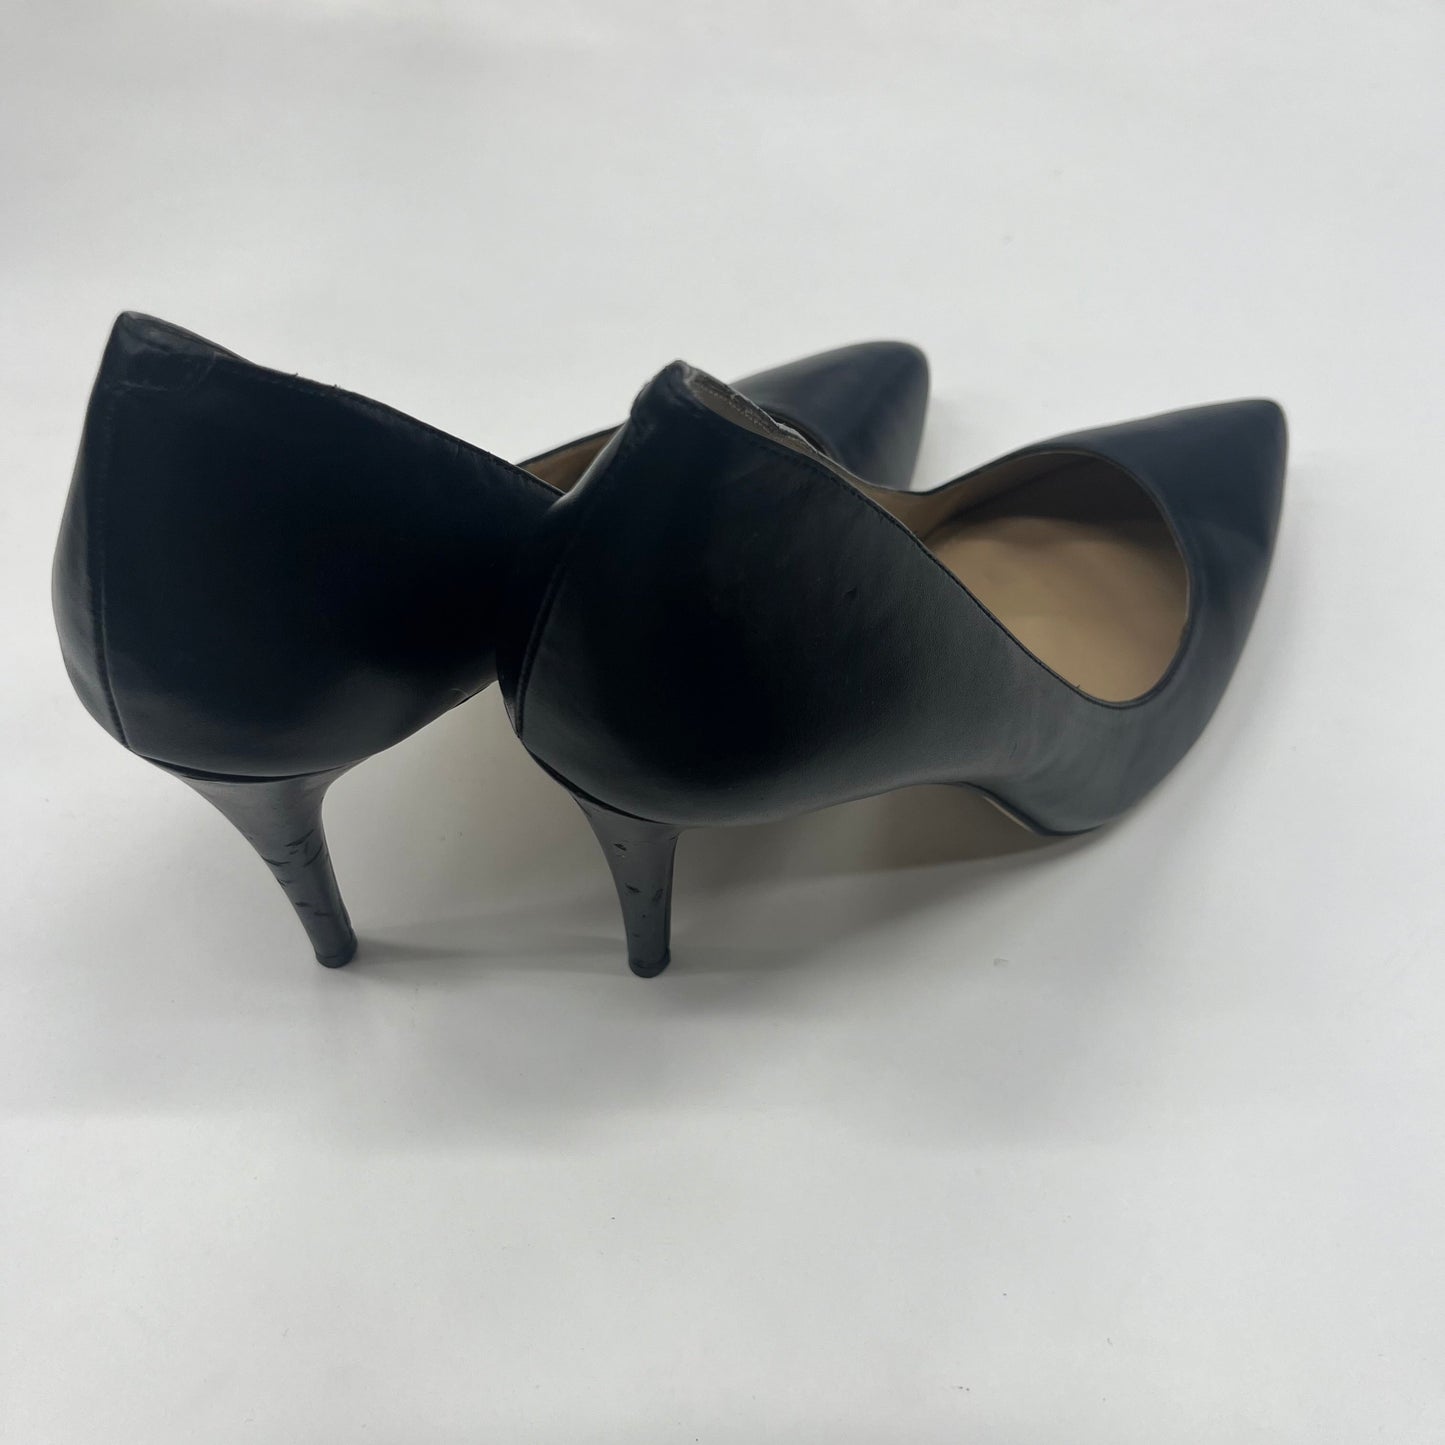 Black Shoes Heels Stiletto Bcbg O, Size 12